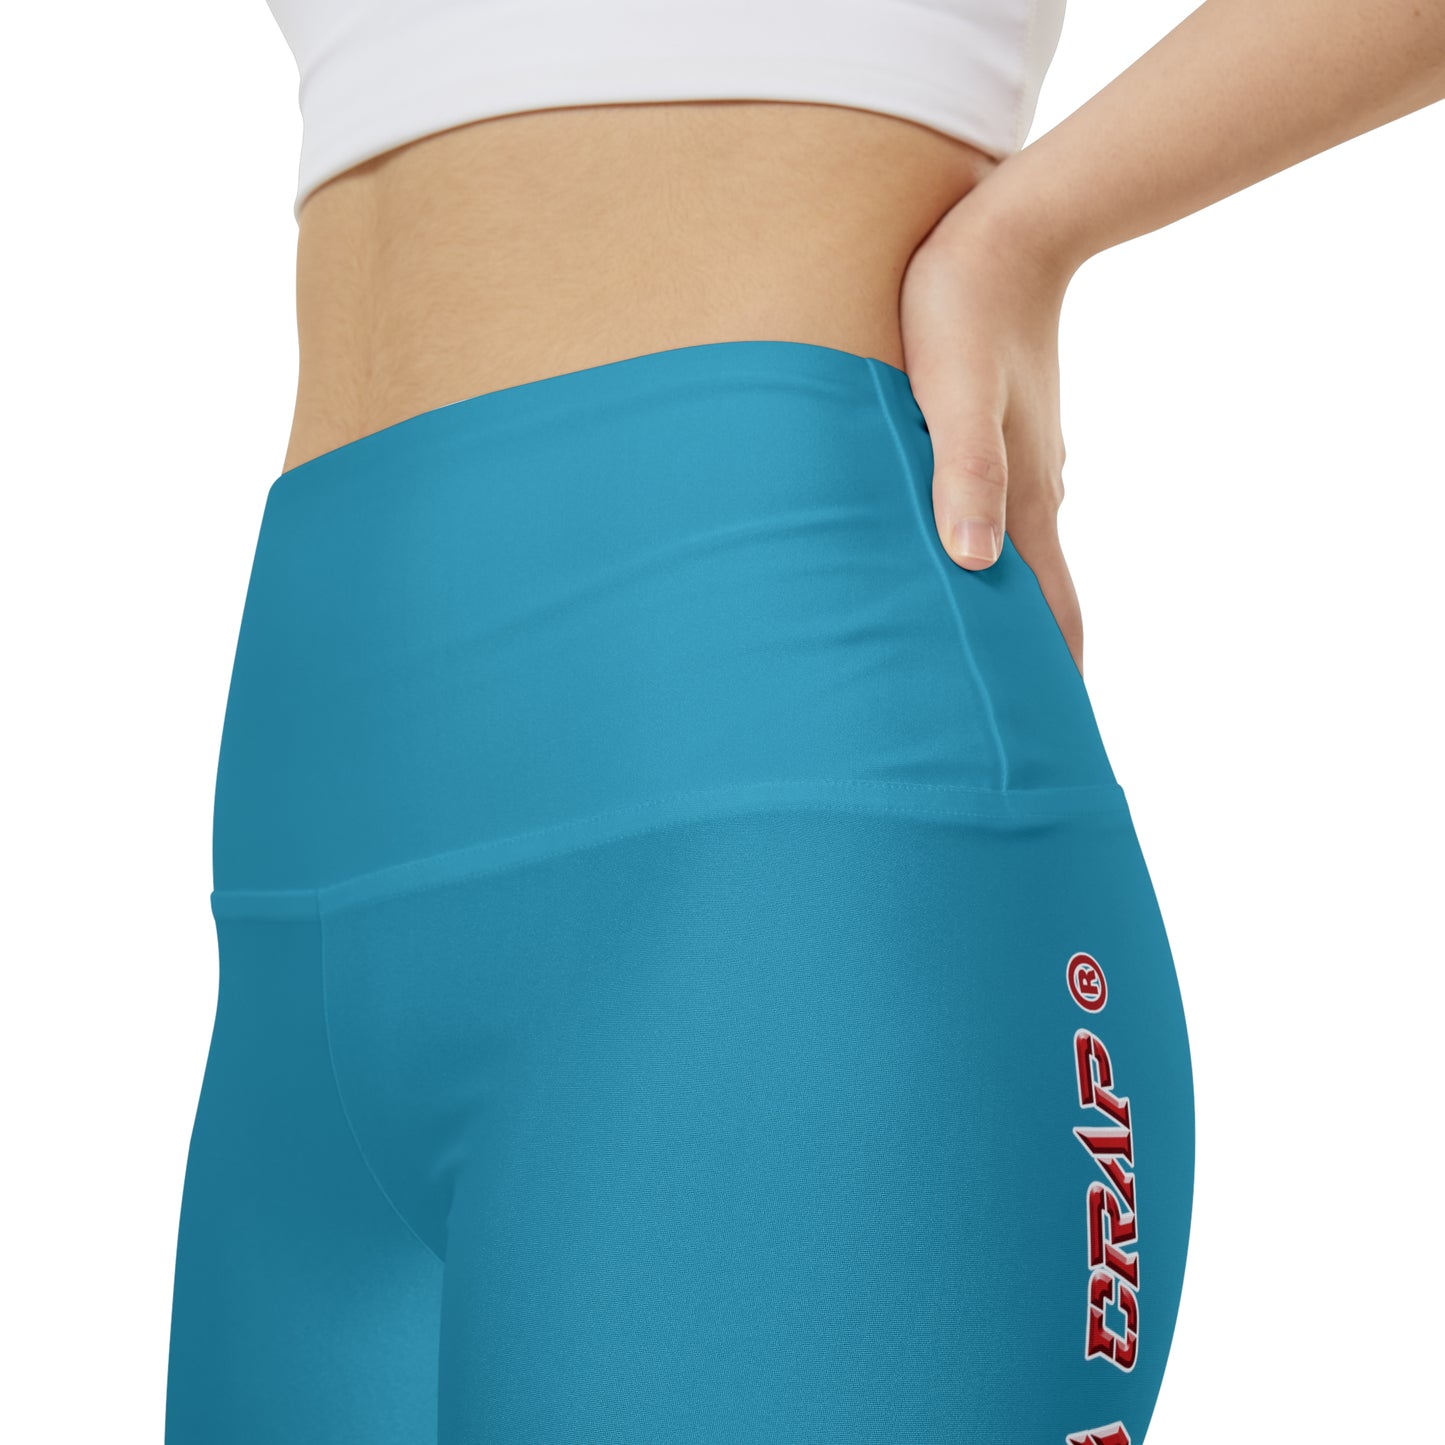 Premium Crap WorkoutWit Shorts - Turquoise